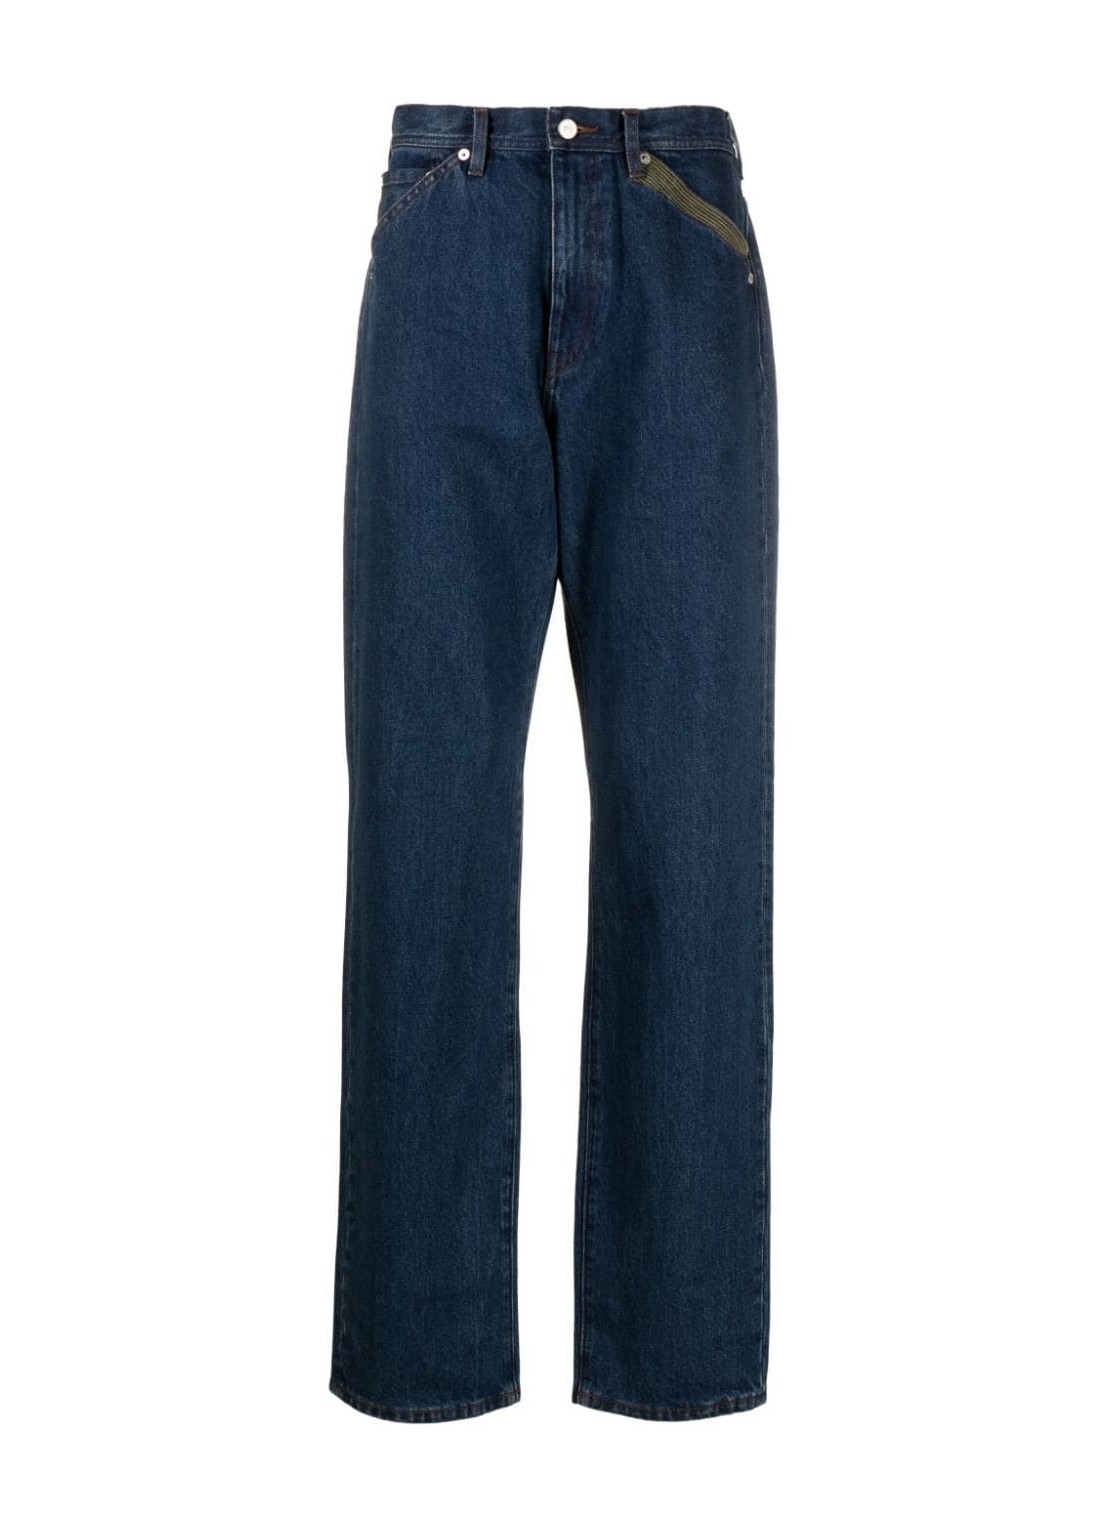 Pantalon jeans ps denim man mens workwear trouser m2r460yem21984 dk talla 32R
 